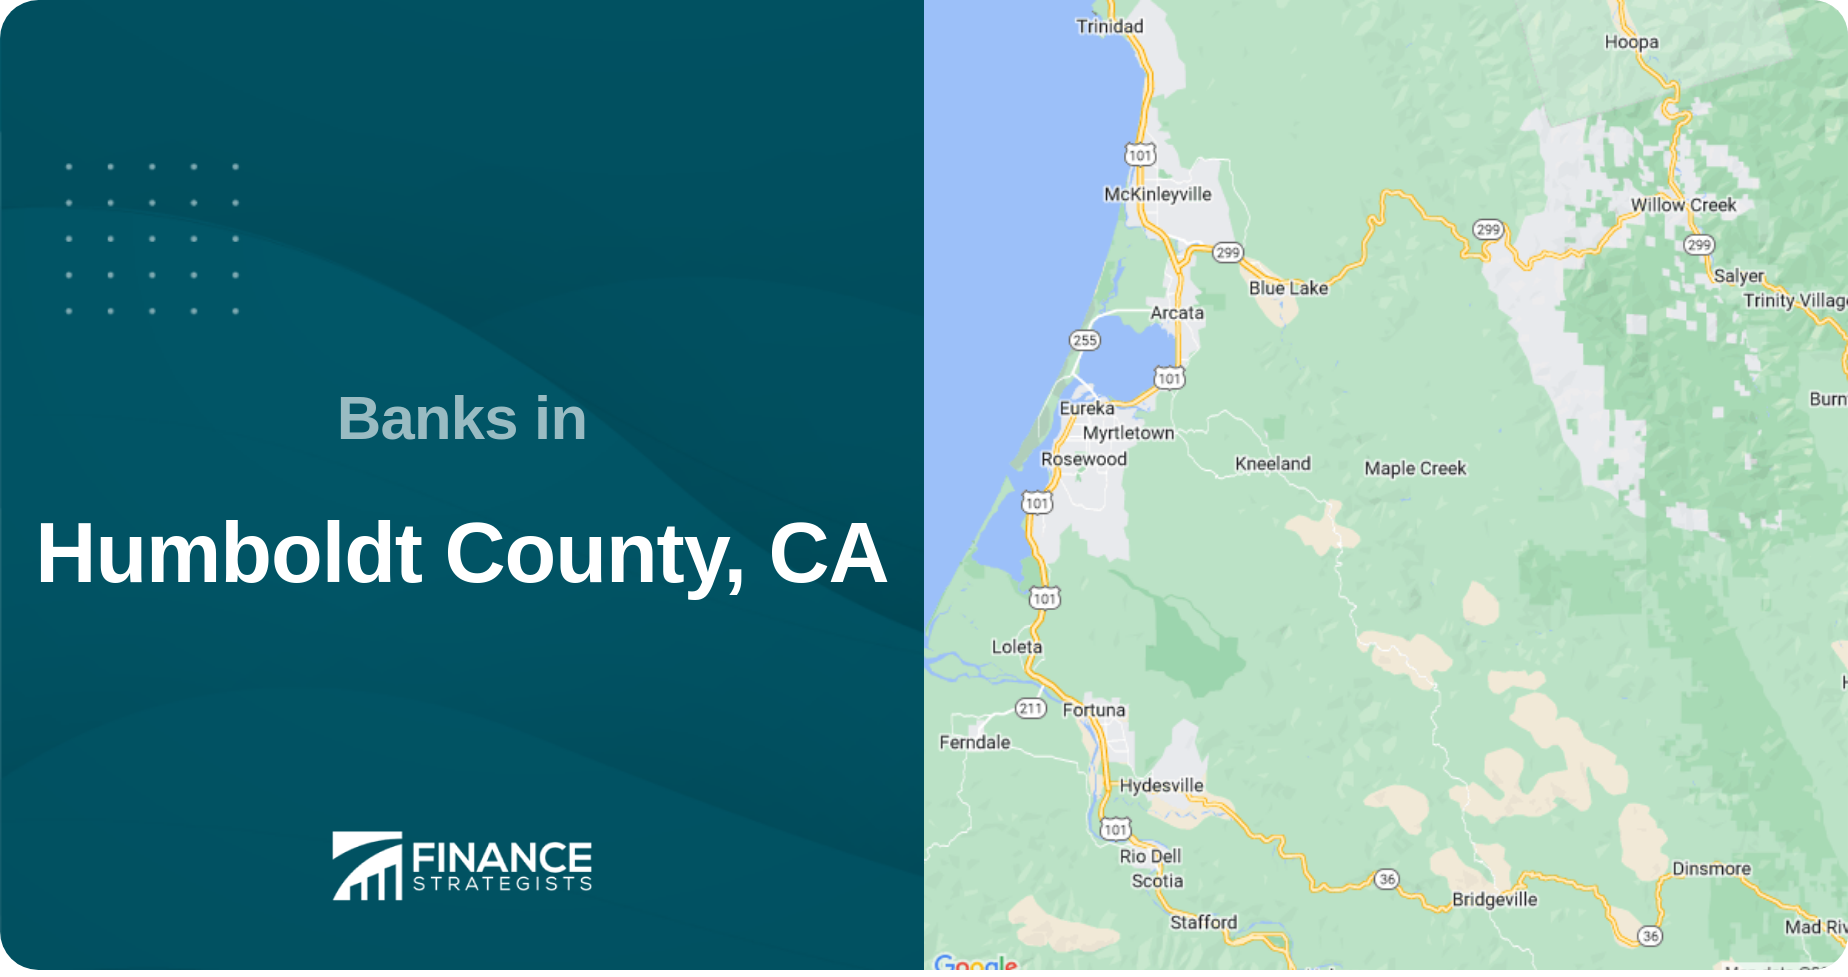 Banks in Humboldt County, CA